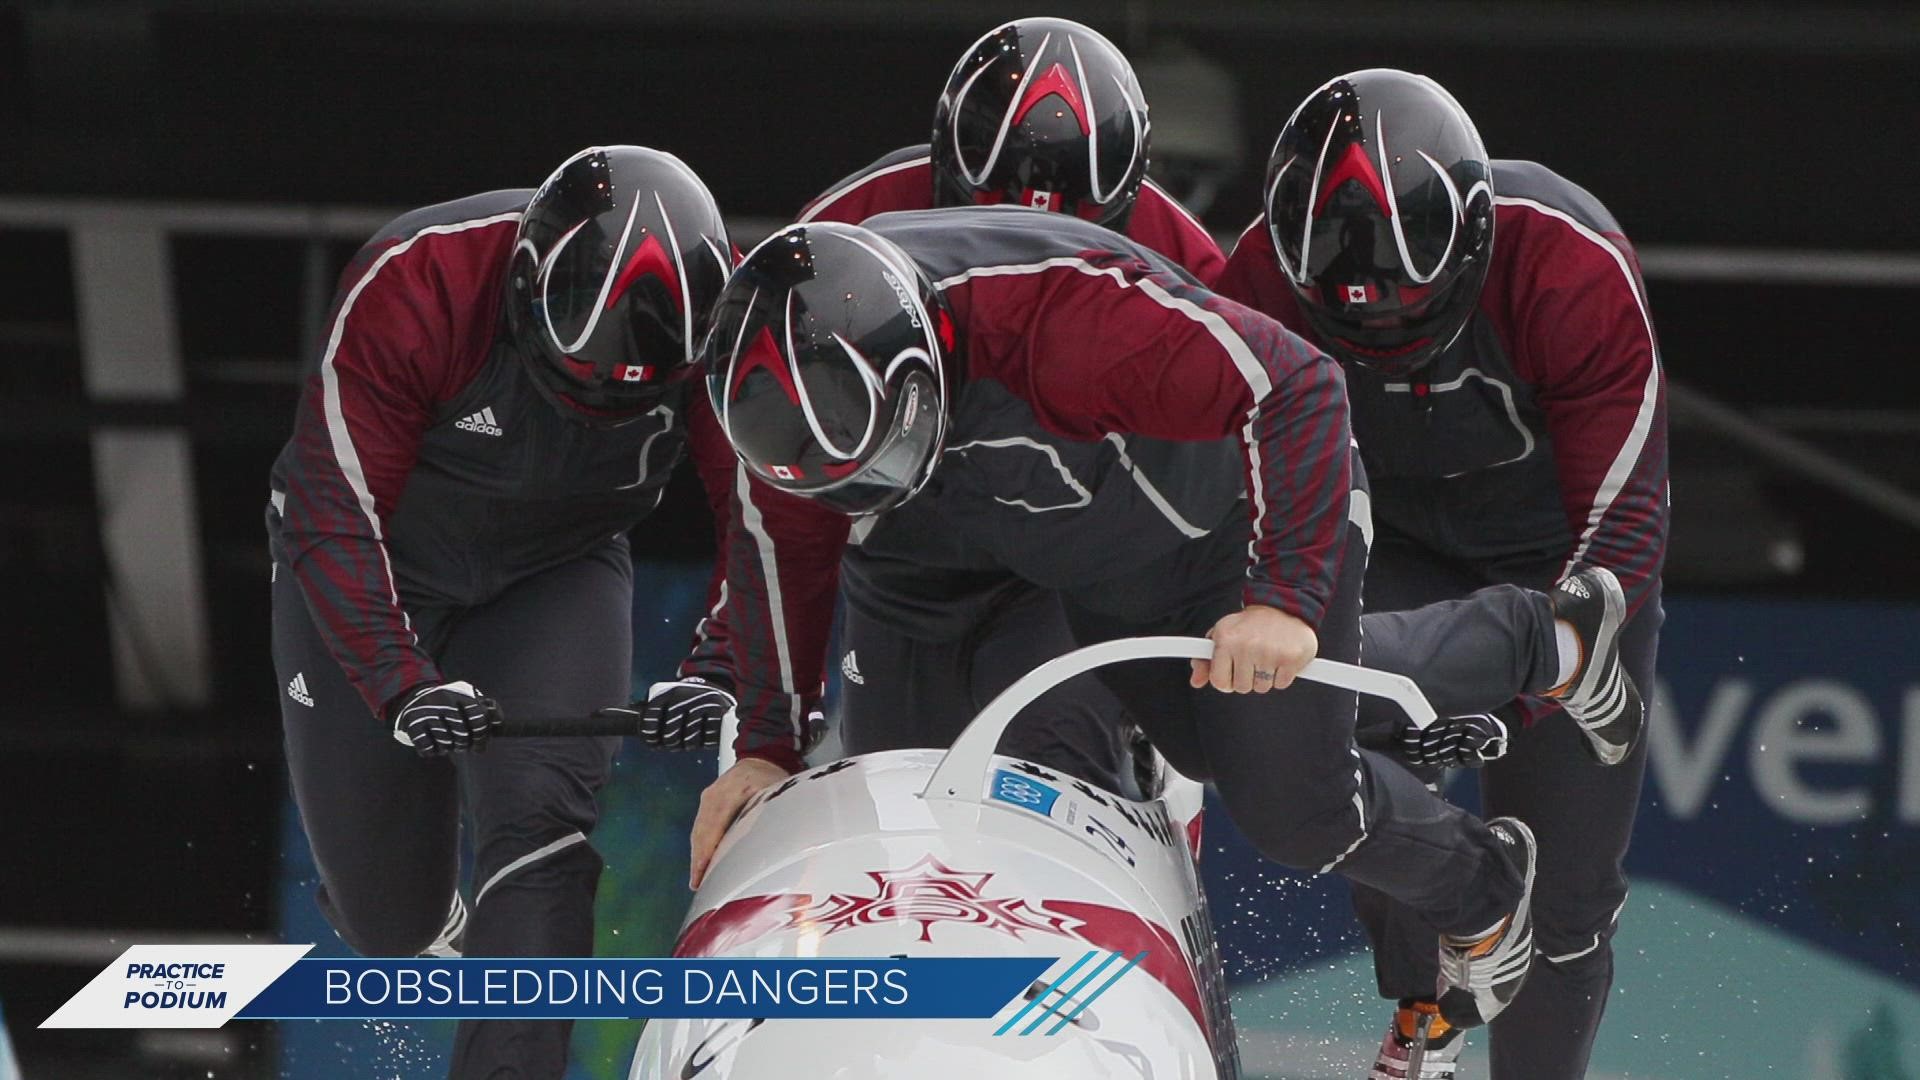 Former Olympic bobsledder sues Team USA over brain injuries ksdk